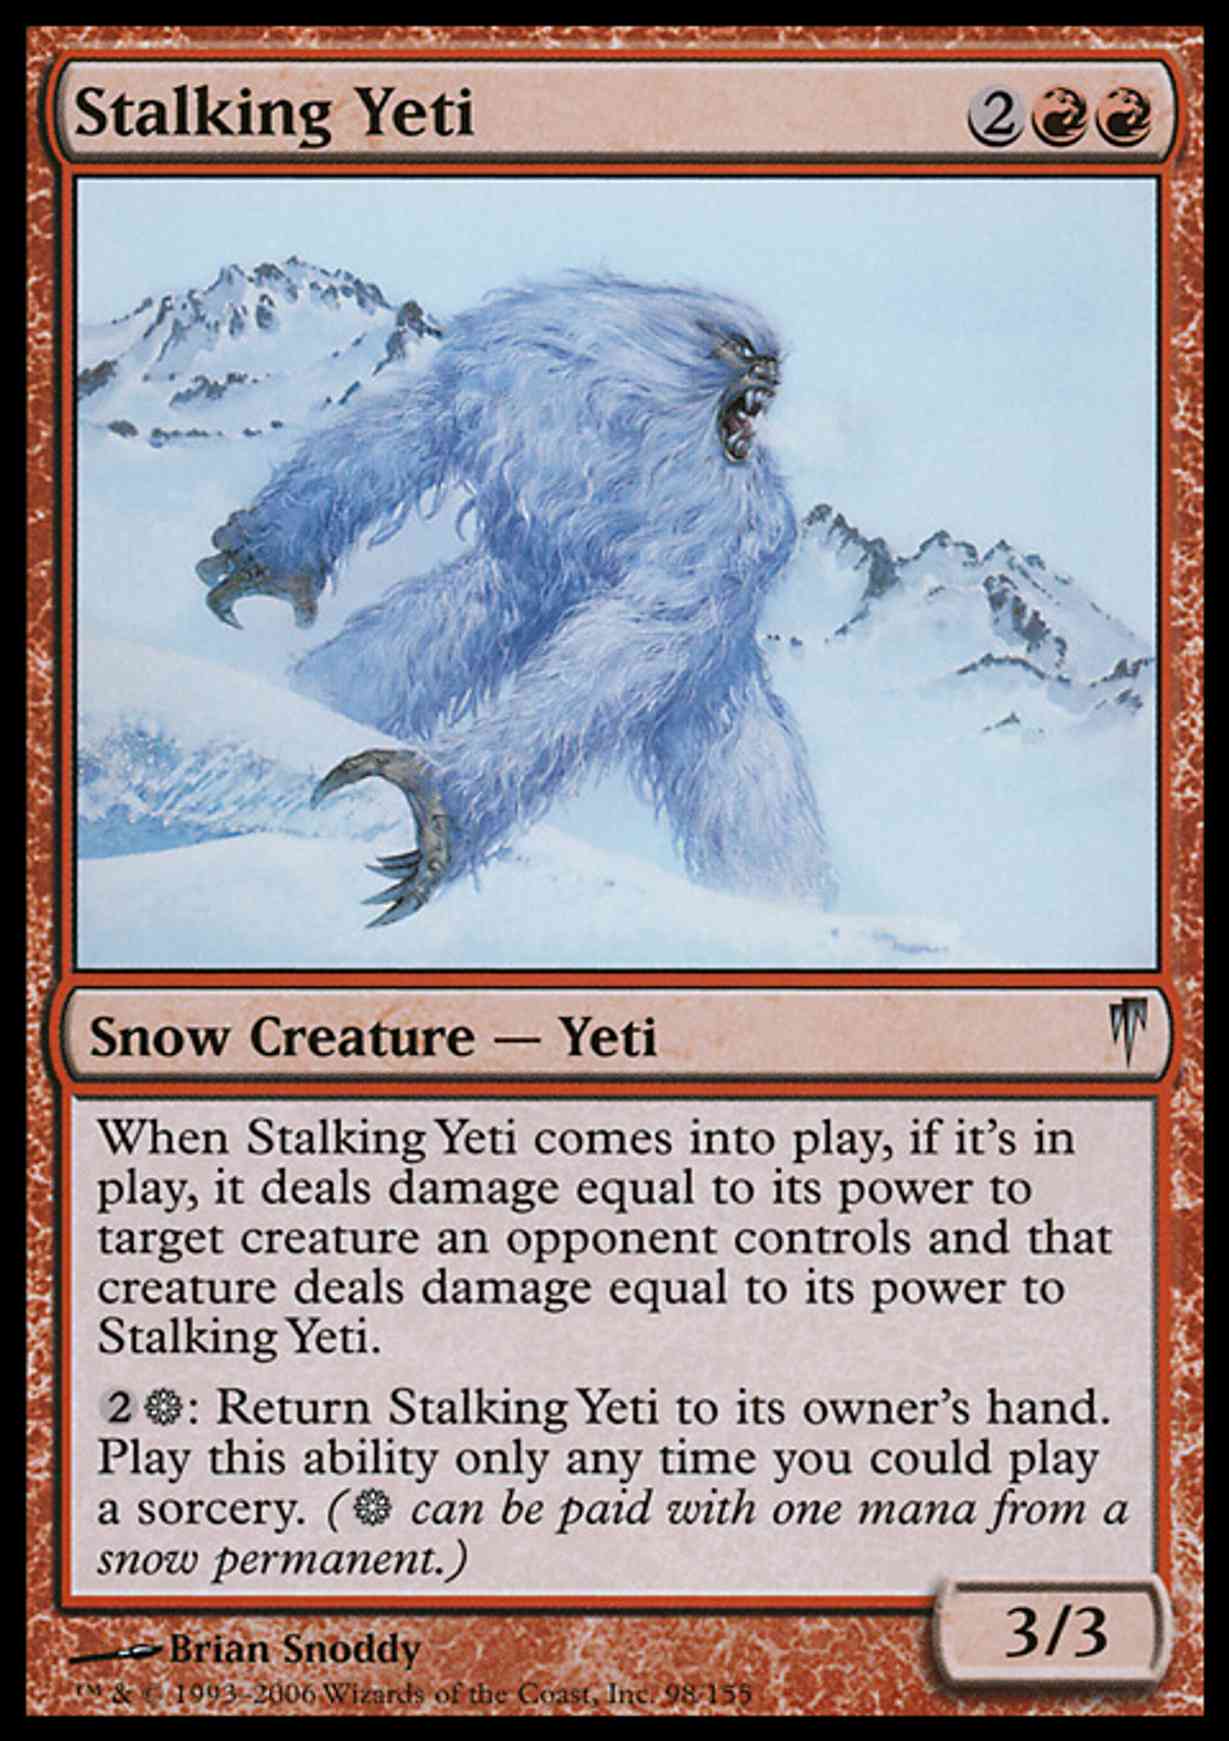 Stalking Yeti magic card front